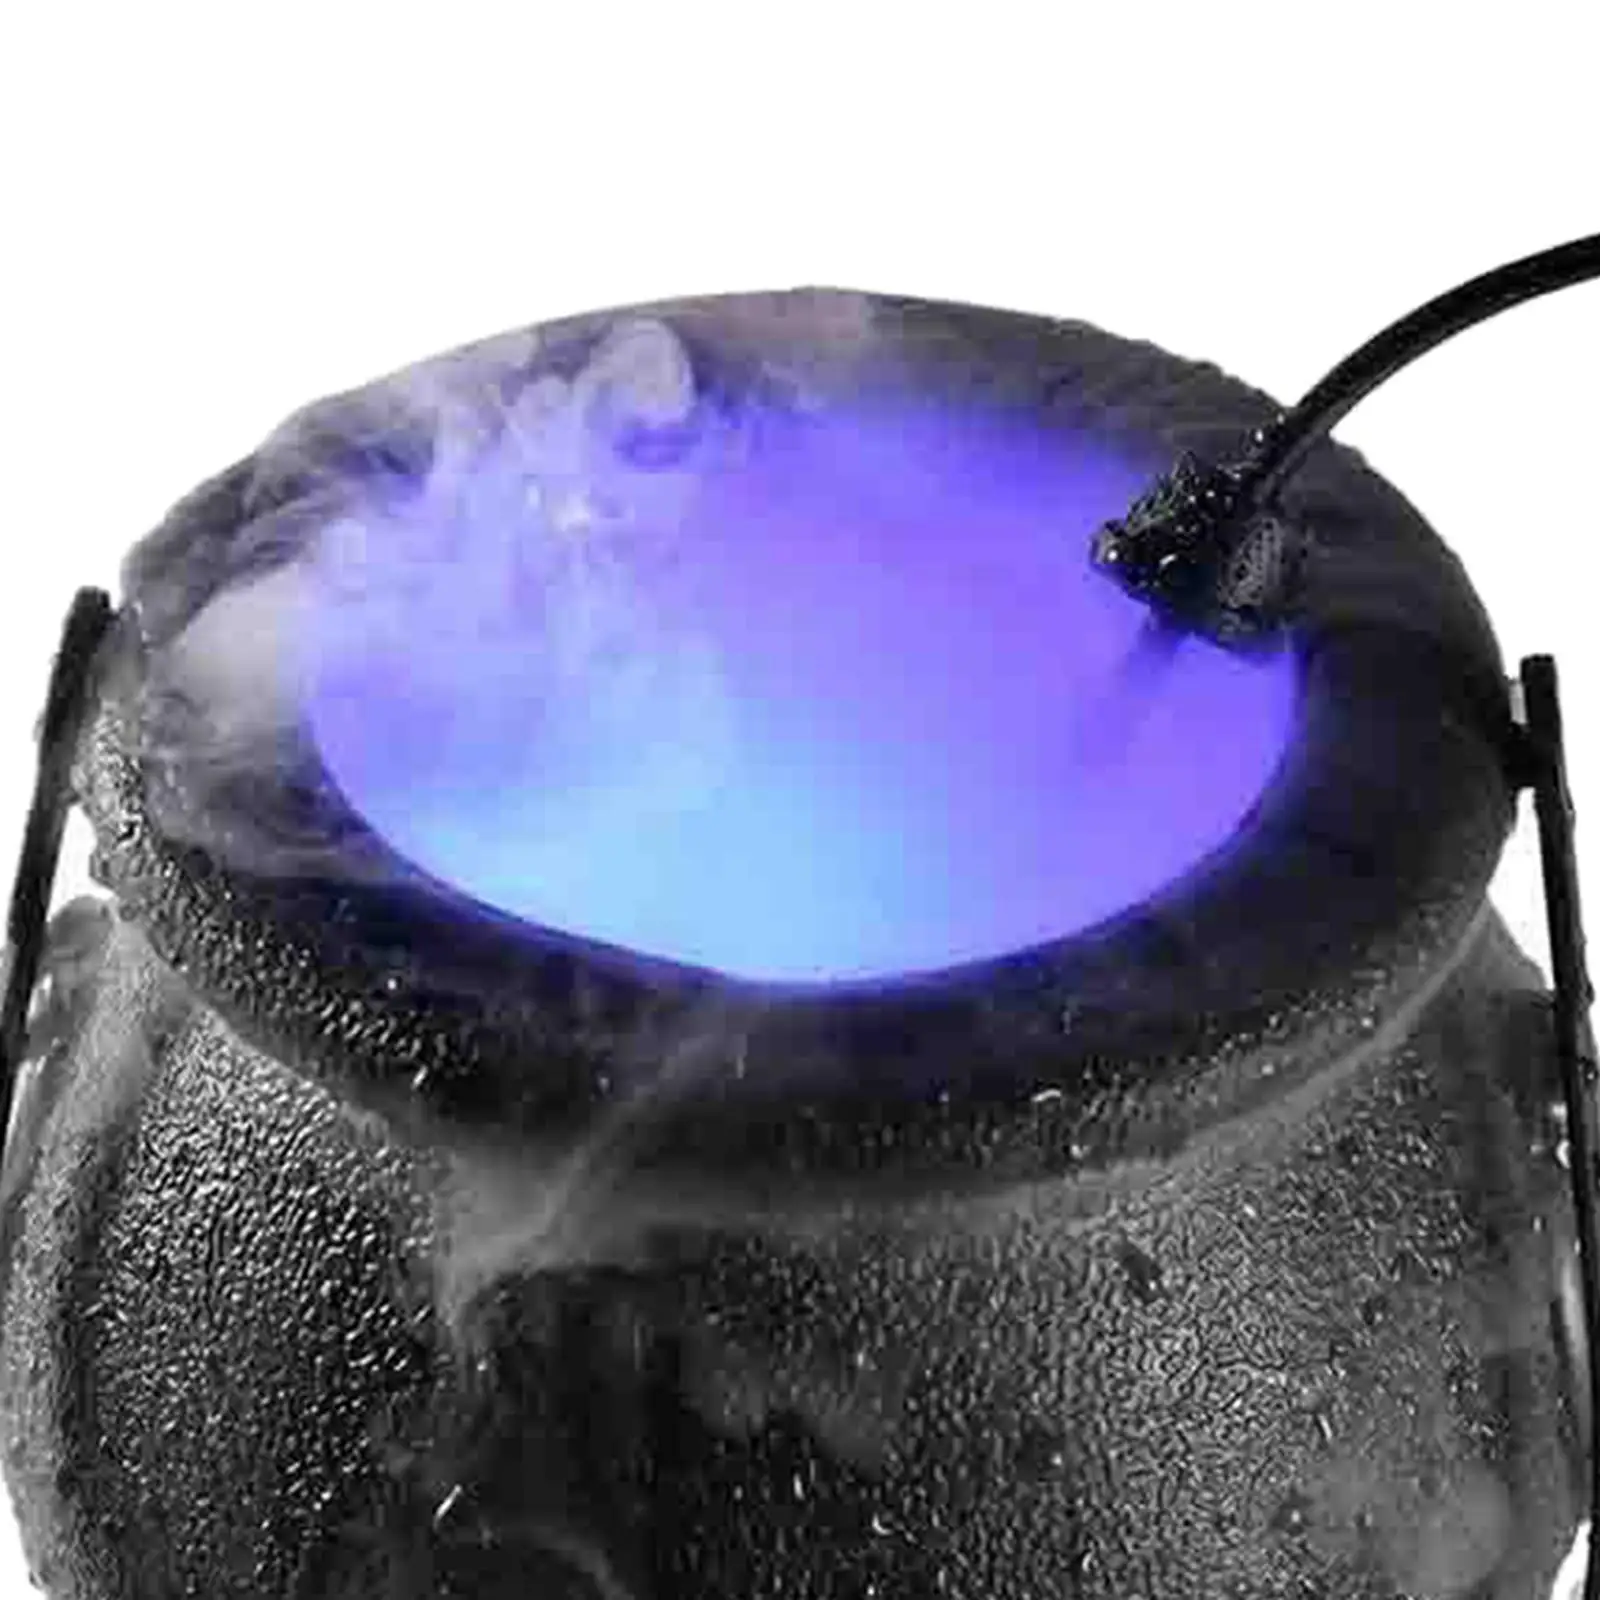 Mist Maker Fogger Fog Mister Humidifier 12 LED Lights Fog Machine Witch Pot Decor Water Fountain for Vase Pond Outdoor Christmas